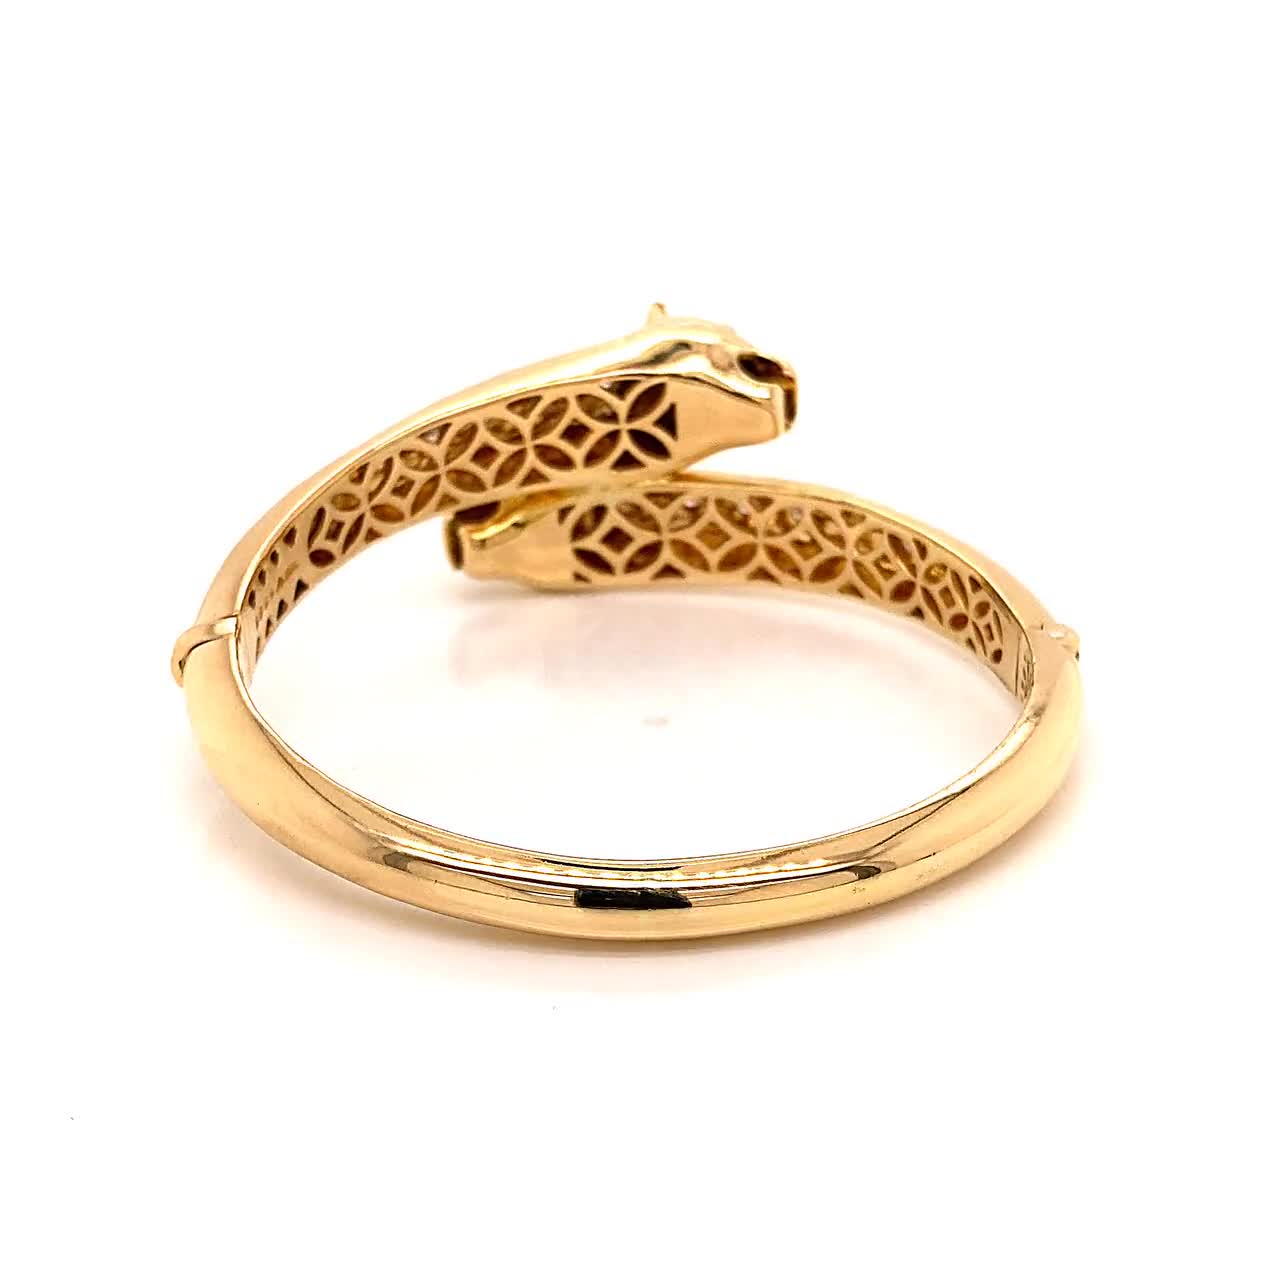 1 Gram Gold Forming Jaguar With Diamond Best Quality Kada For Men - Style  A831, पुरूषो का कड़ा - Soni Fashion, Rajkot | ID: 2849169798373